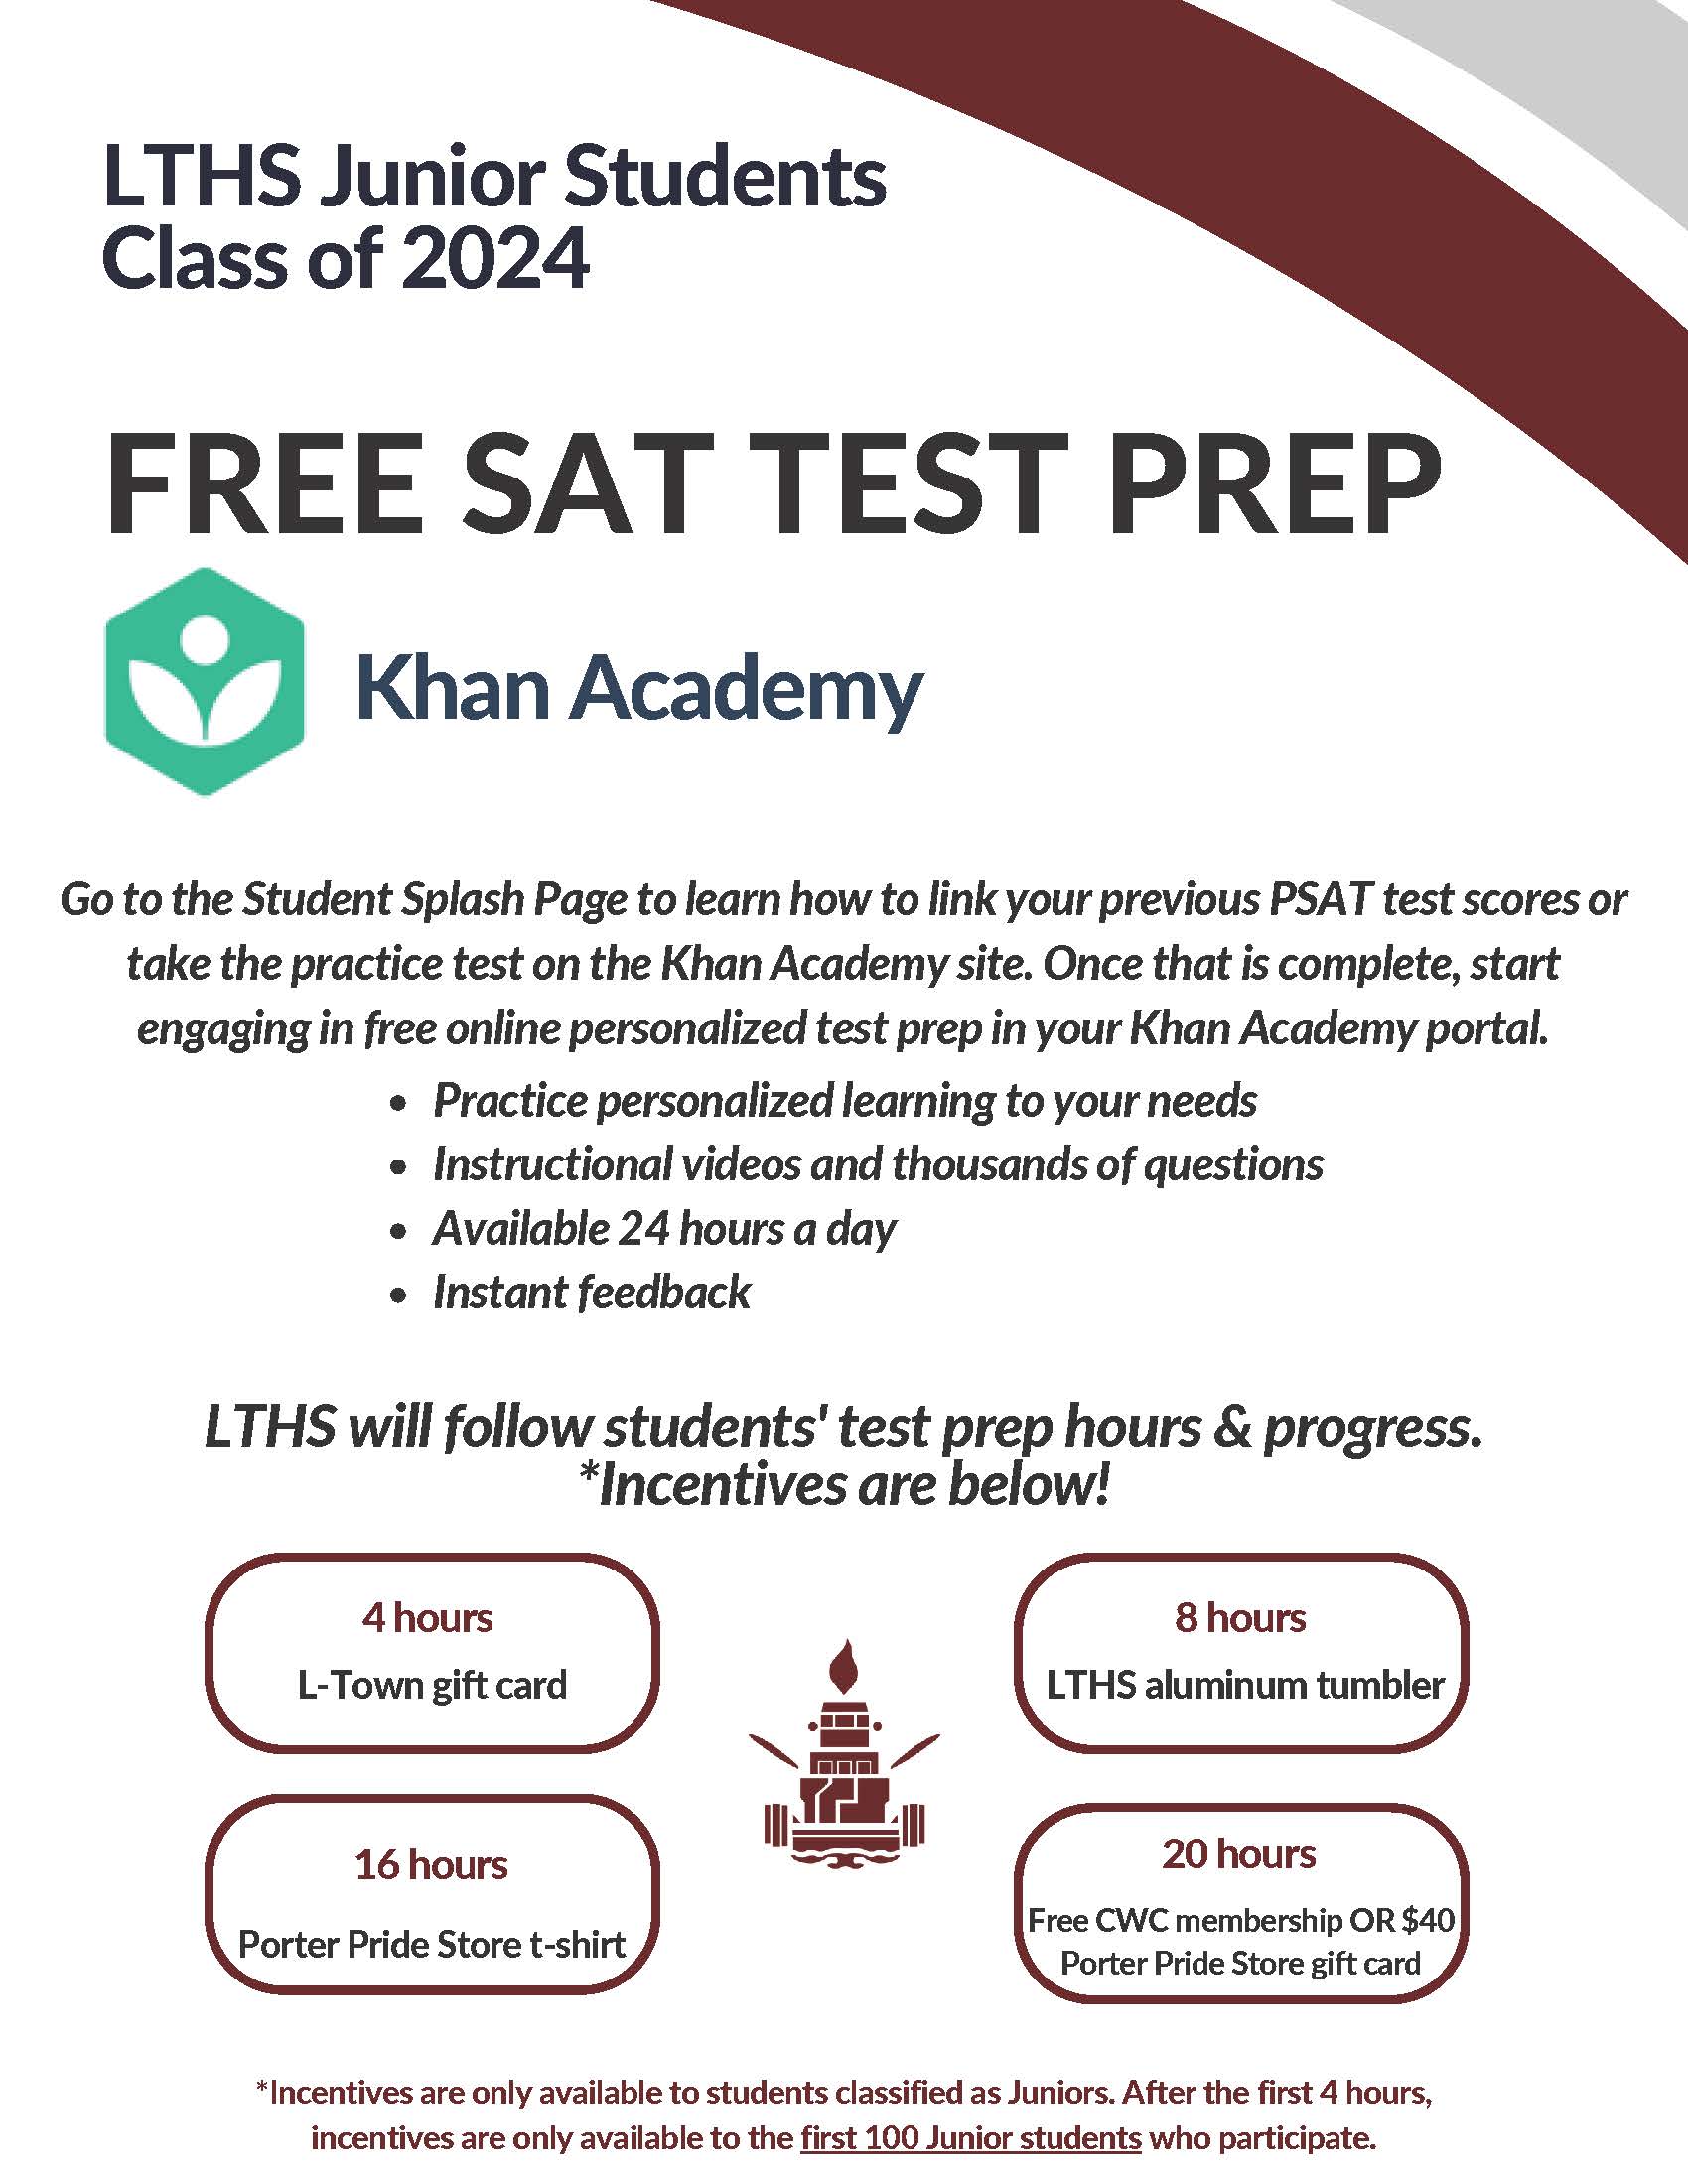 Free SAT Test Prep